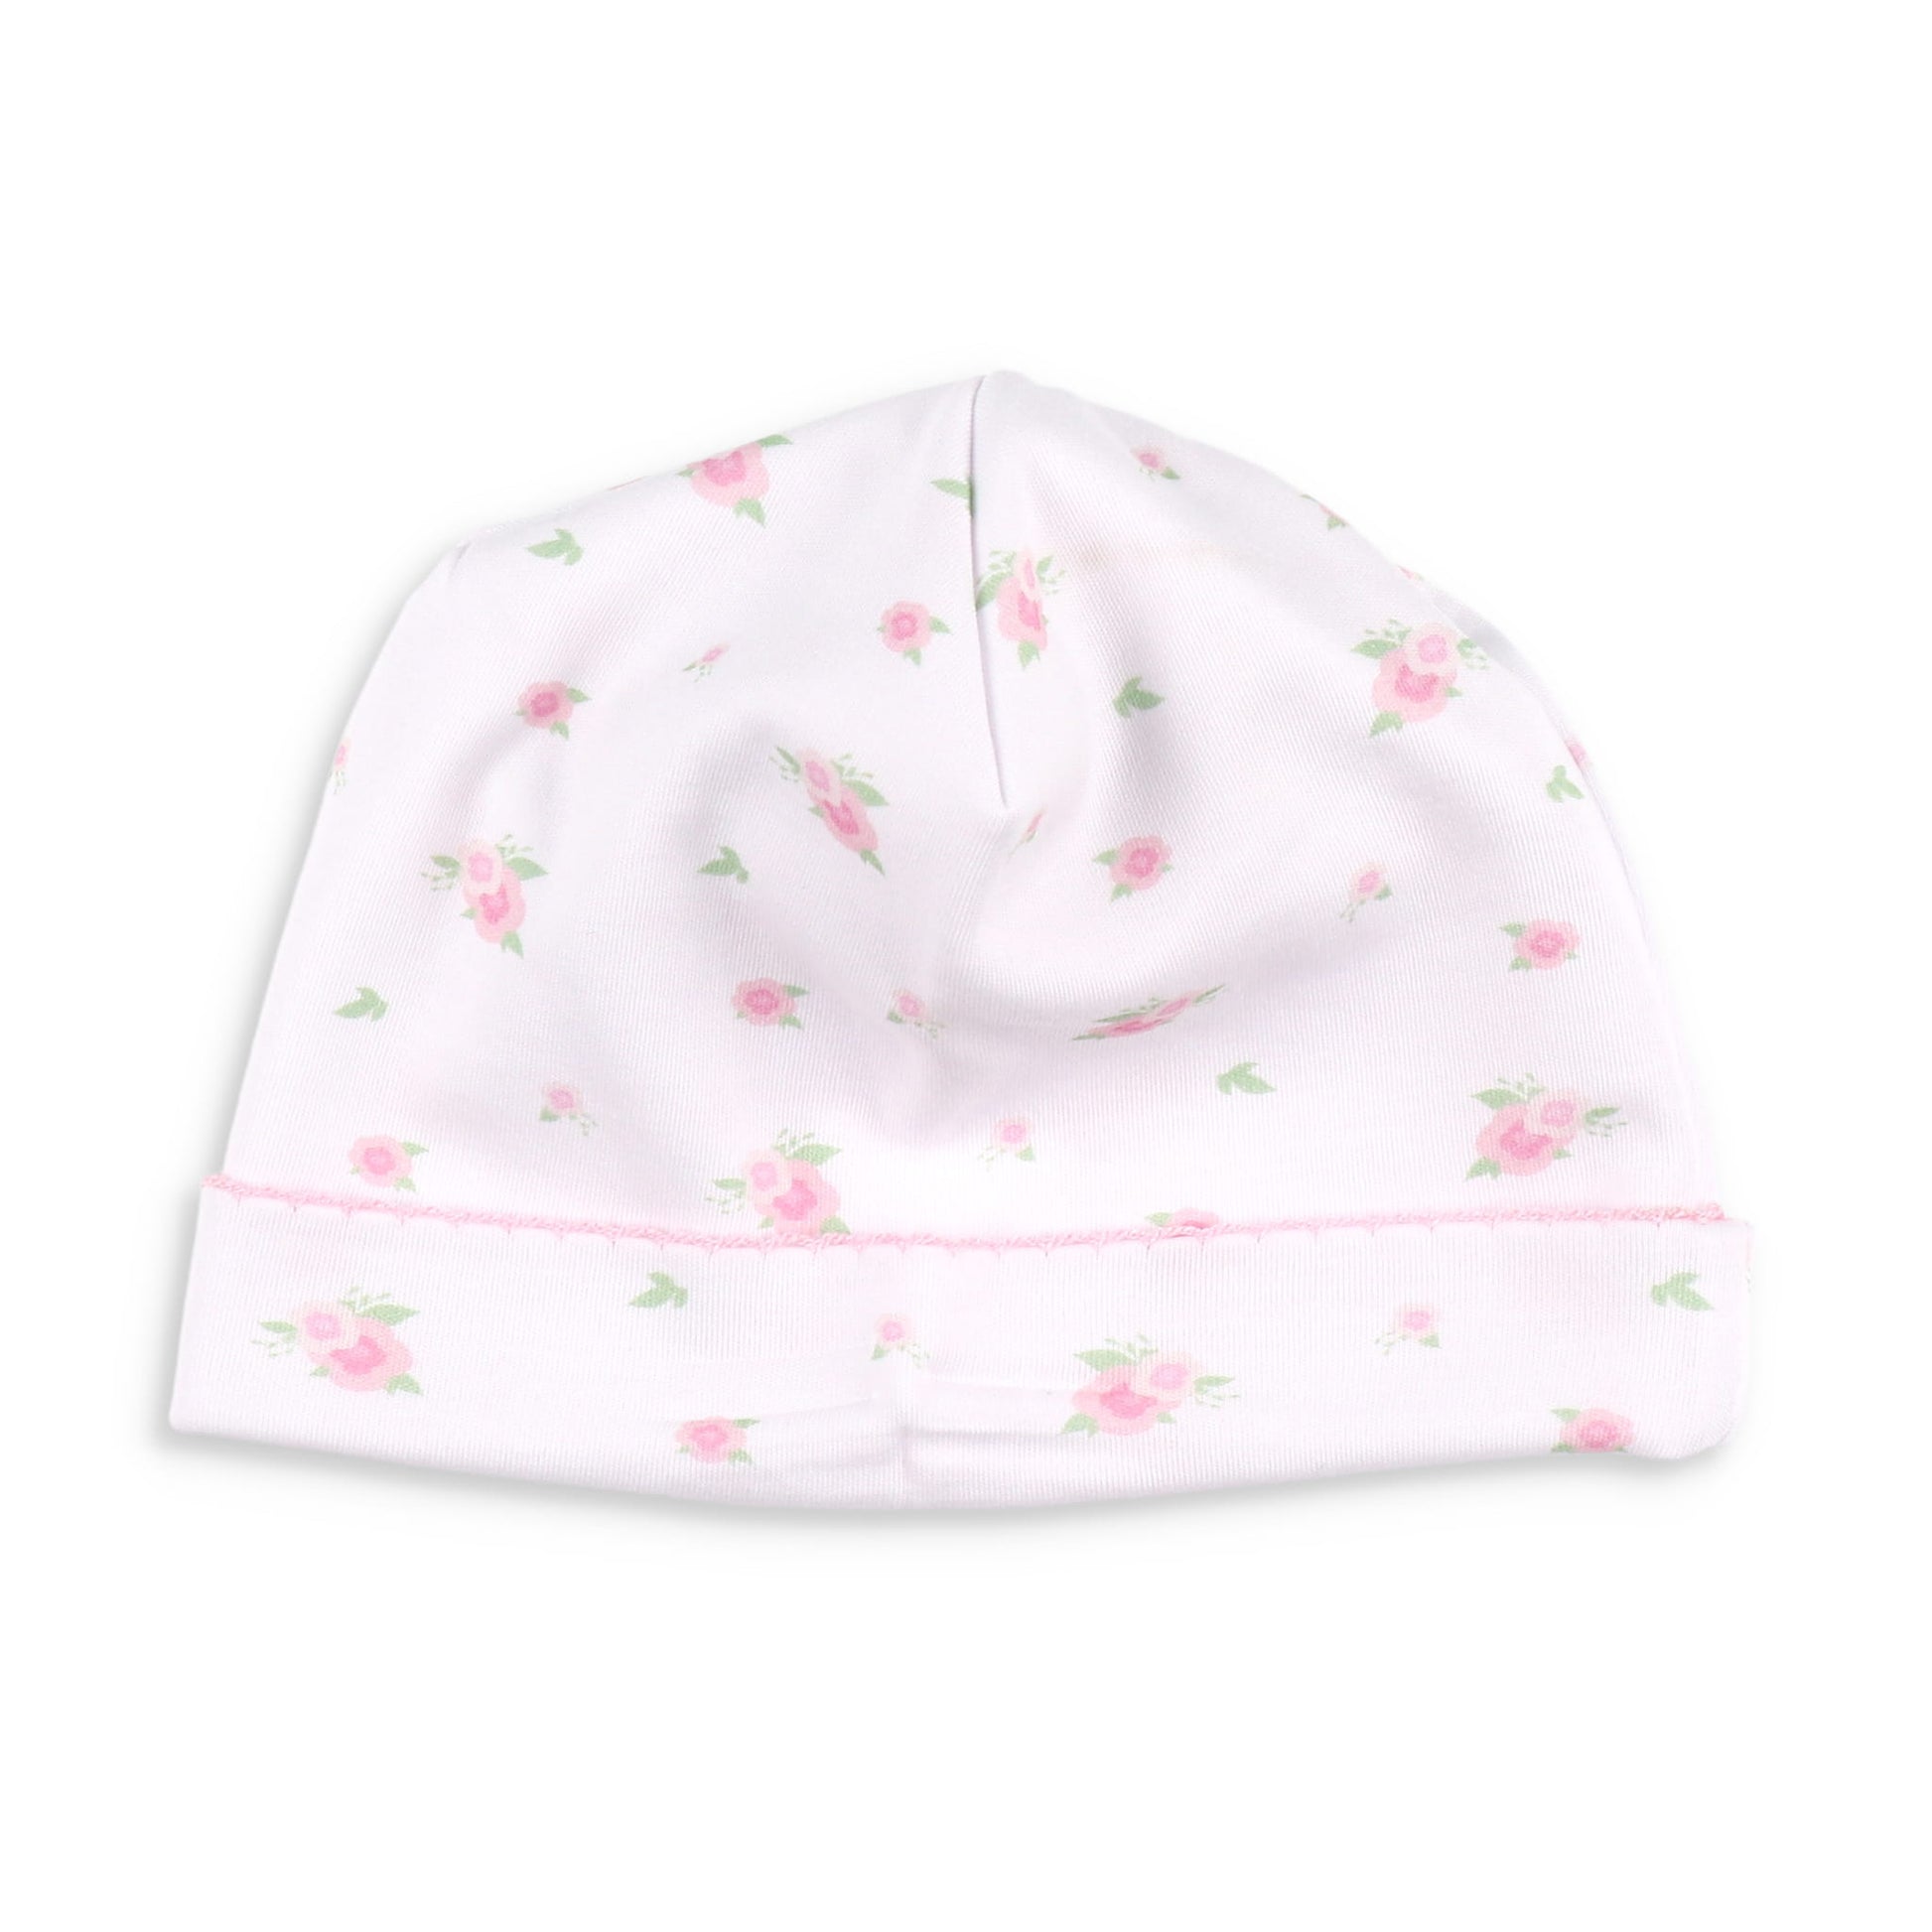 Rosette Pima Baby Hat